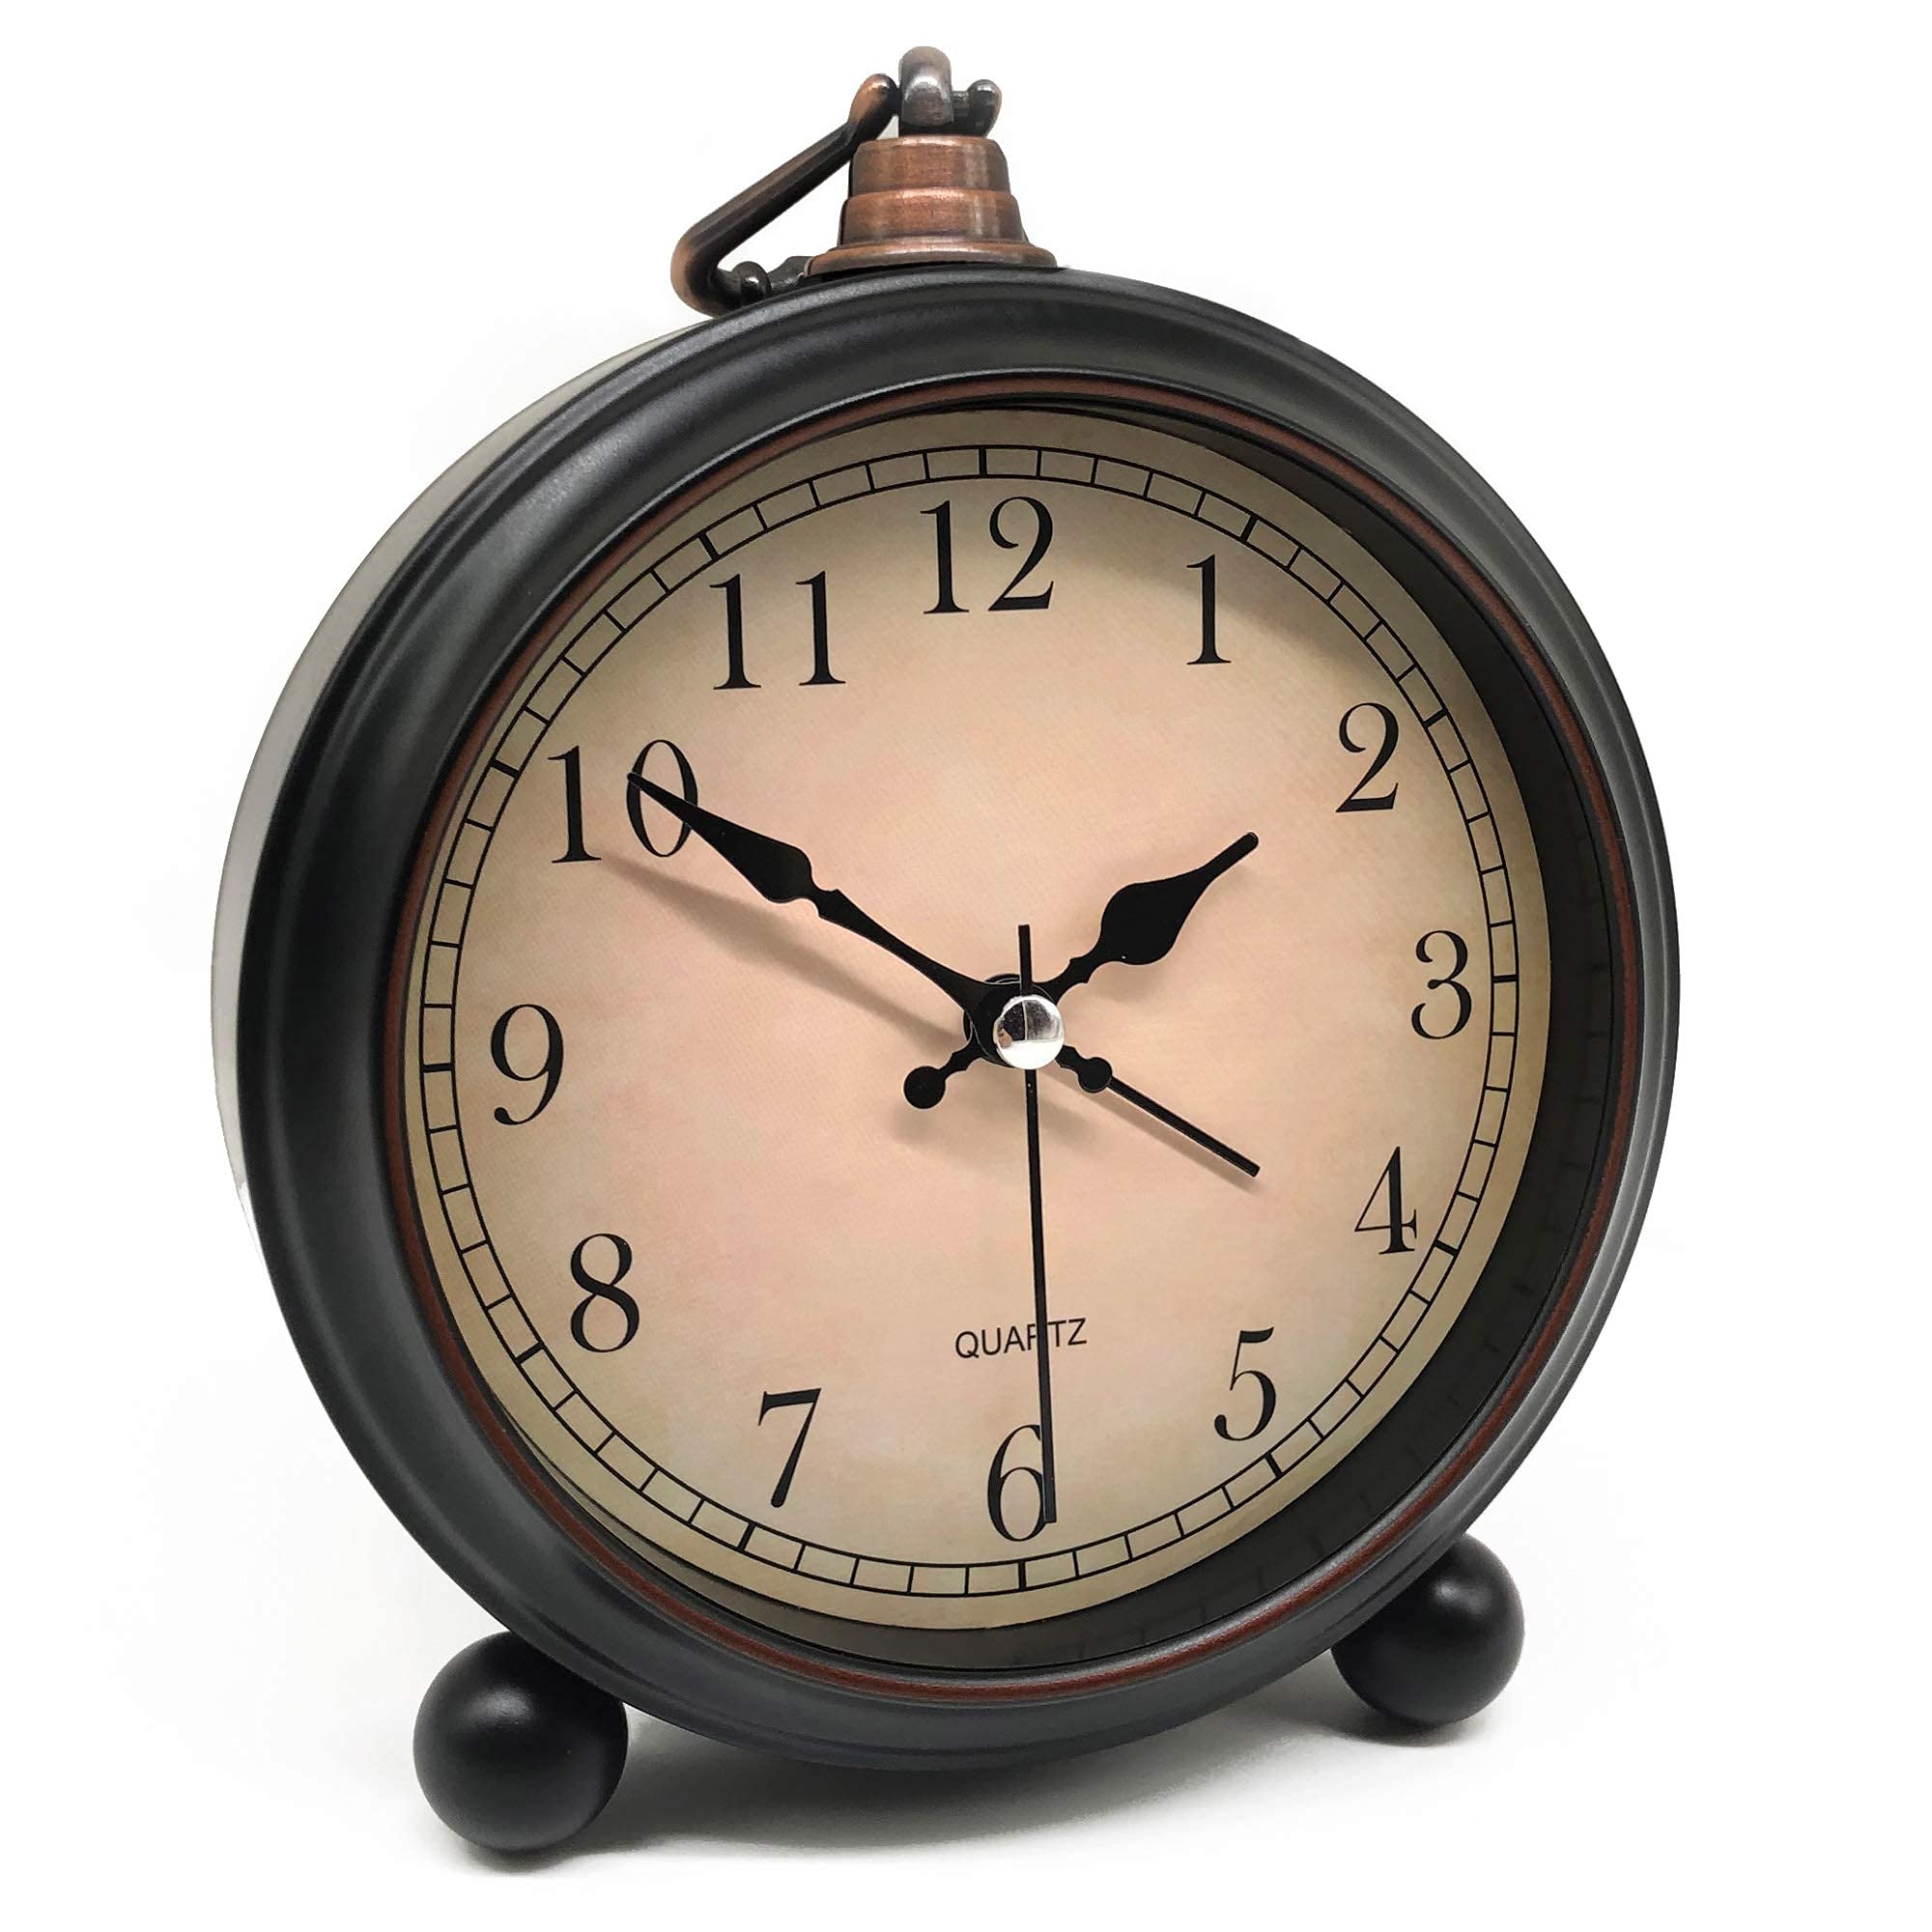 TooTa Vintage Retro Analog Alarm Clock